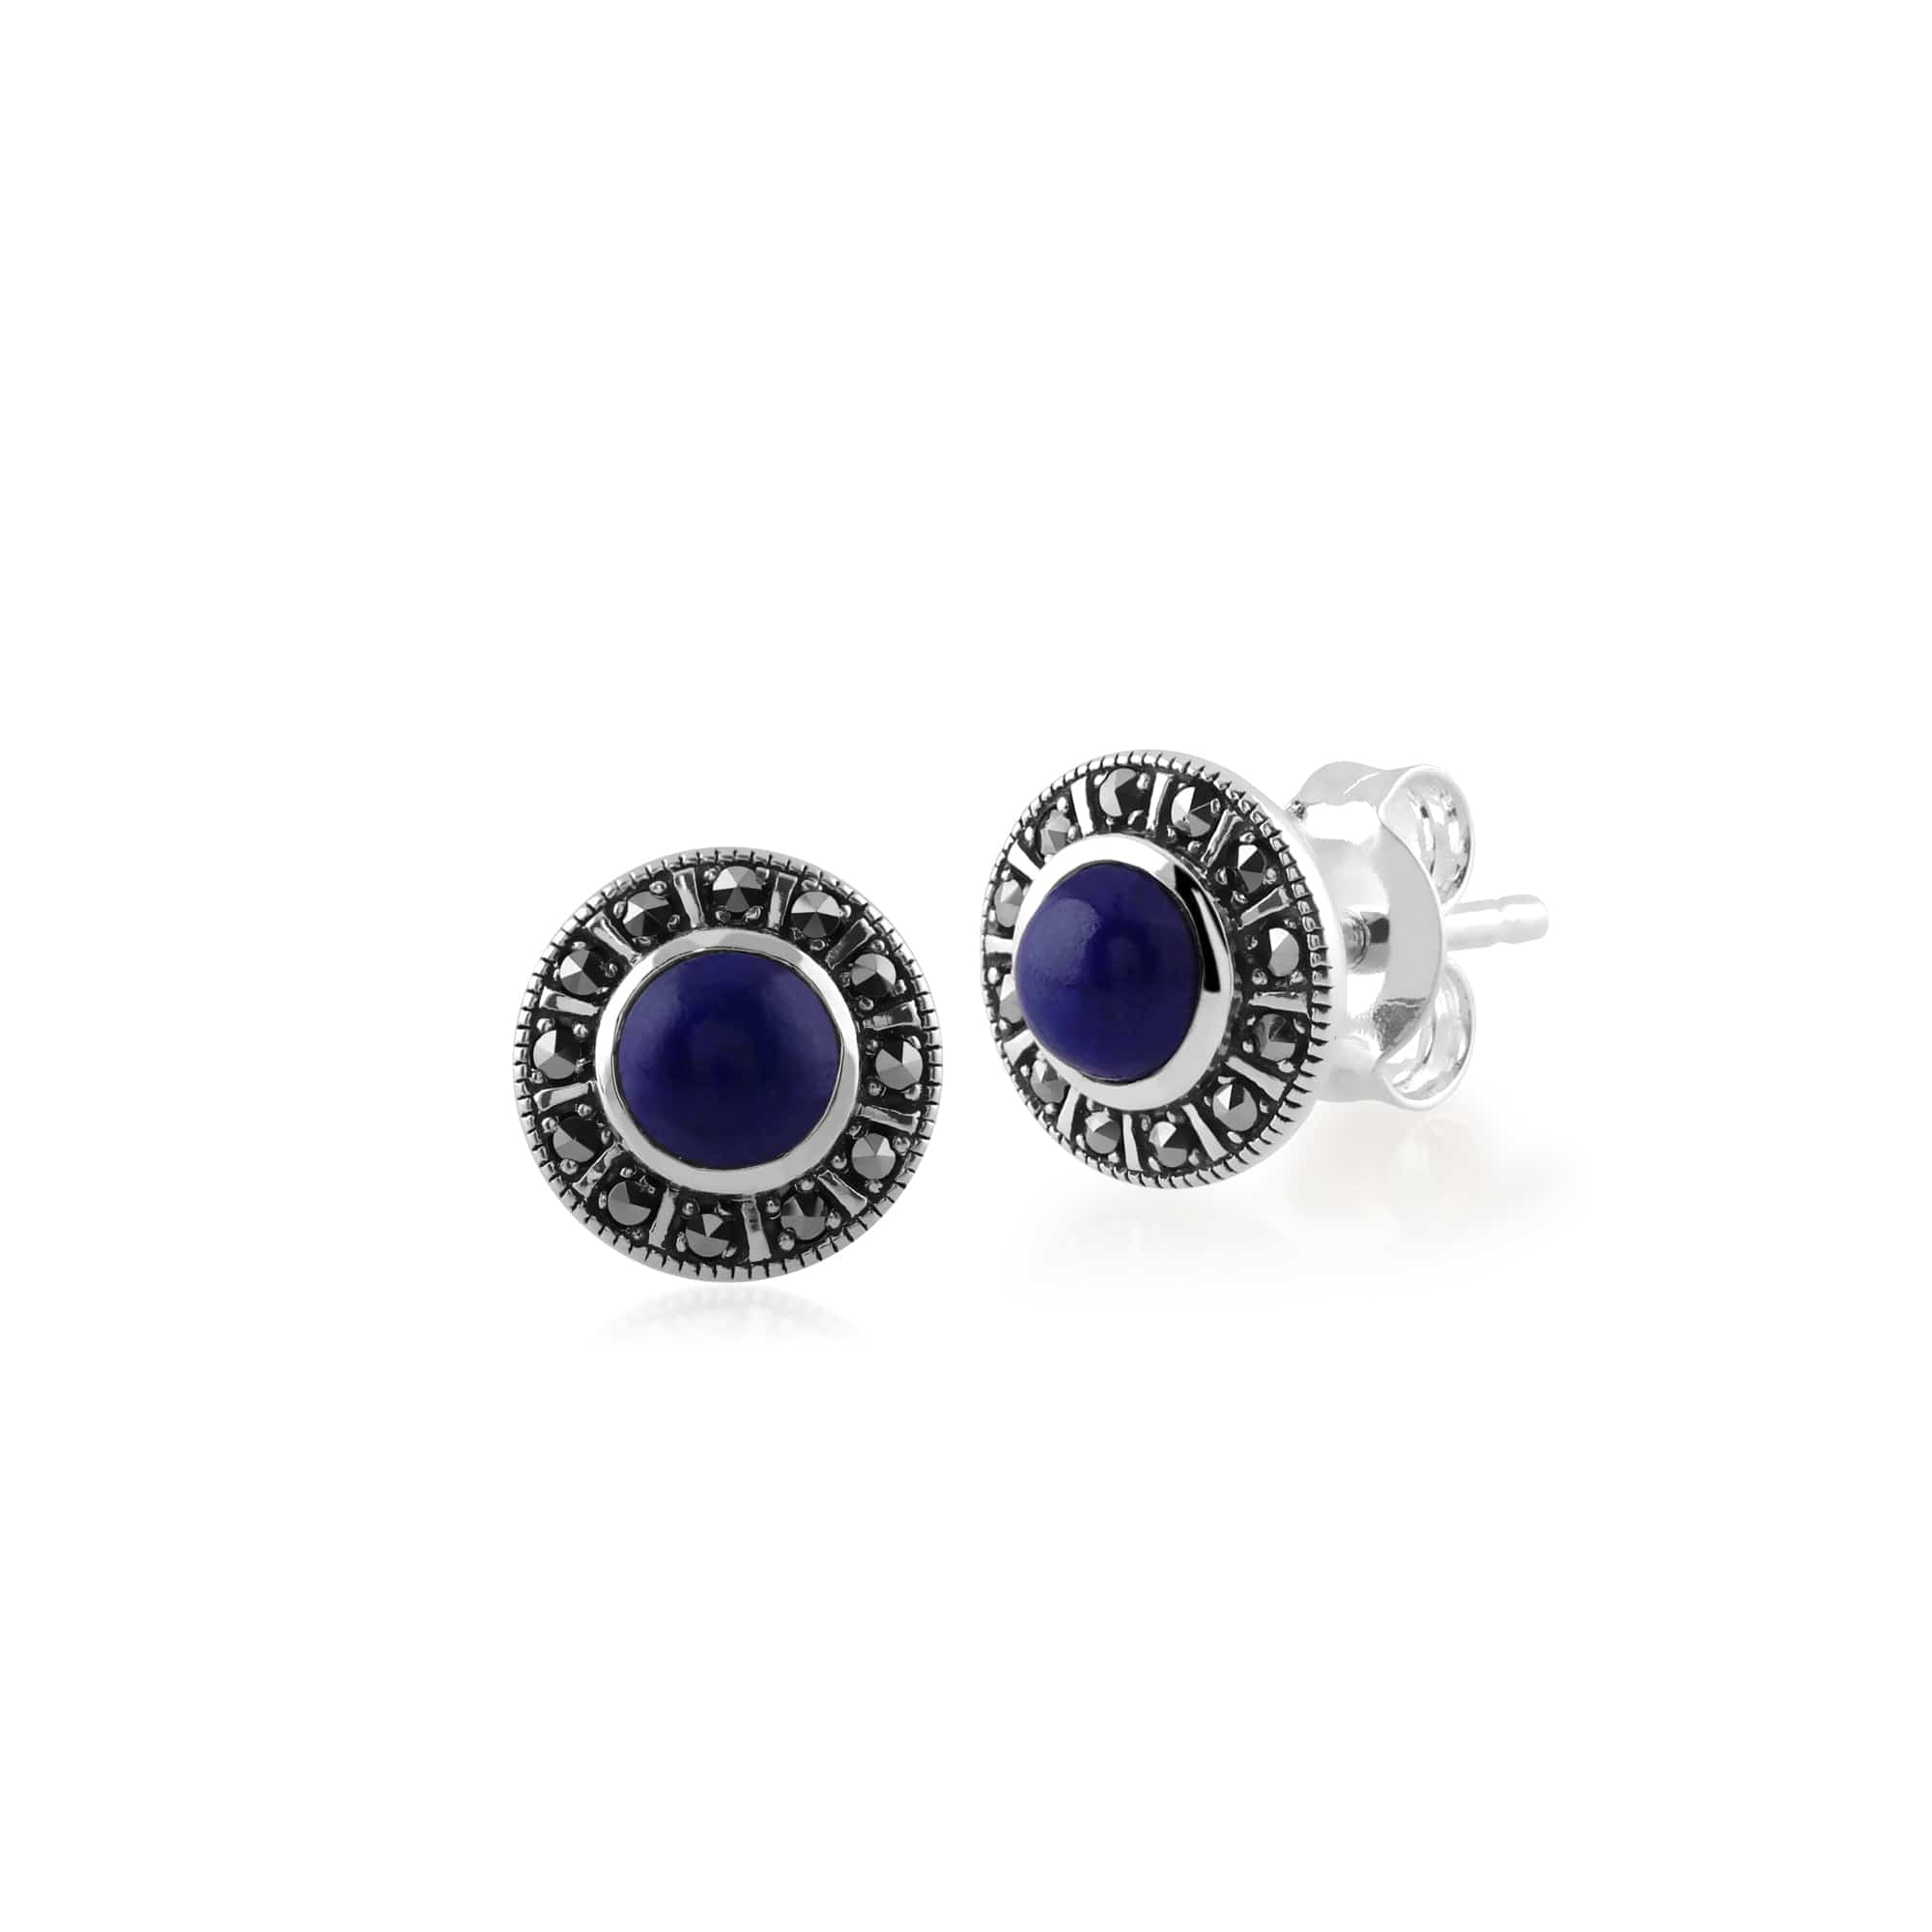 Art Deco Style Round Lapis Lazuli & Marcasite Halo Stud Earrings & Pendant Set in 925 Sterling Silver - Gemondo